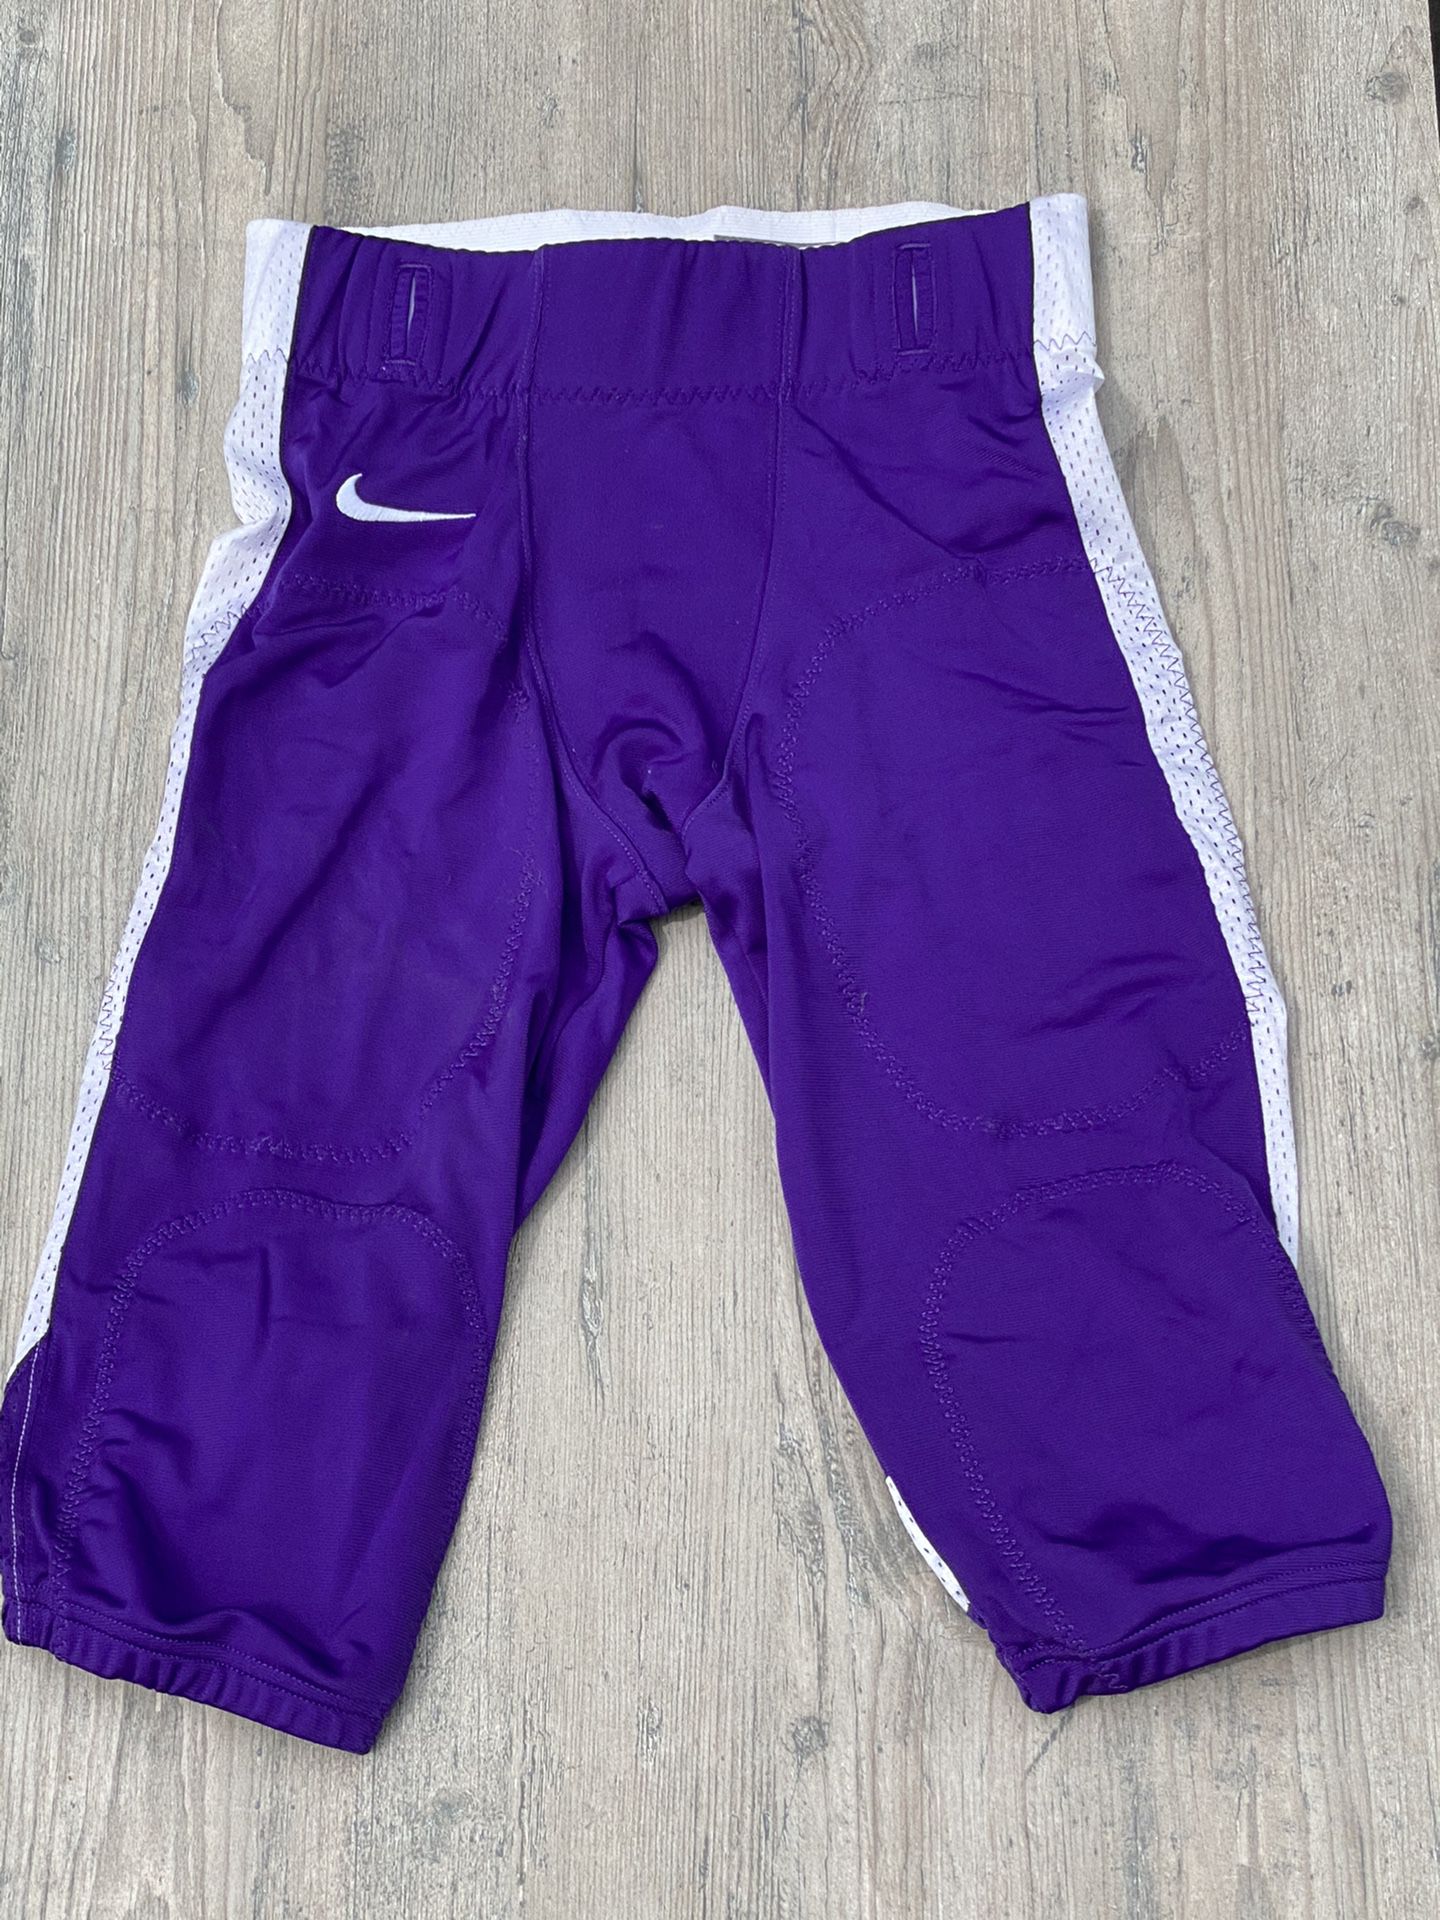 Nike Purple Football Pants - S